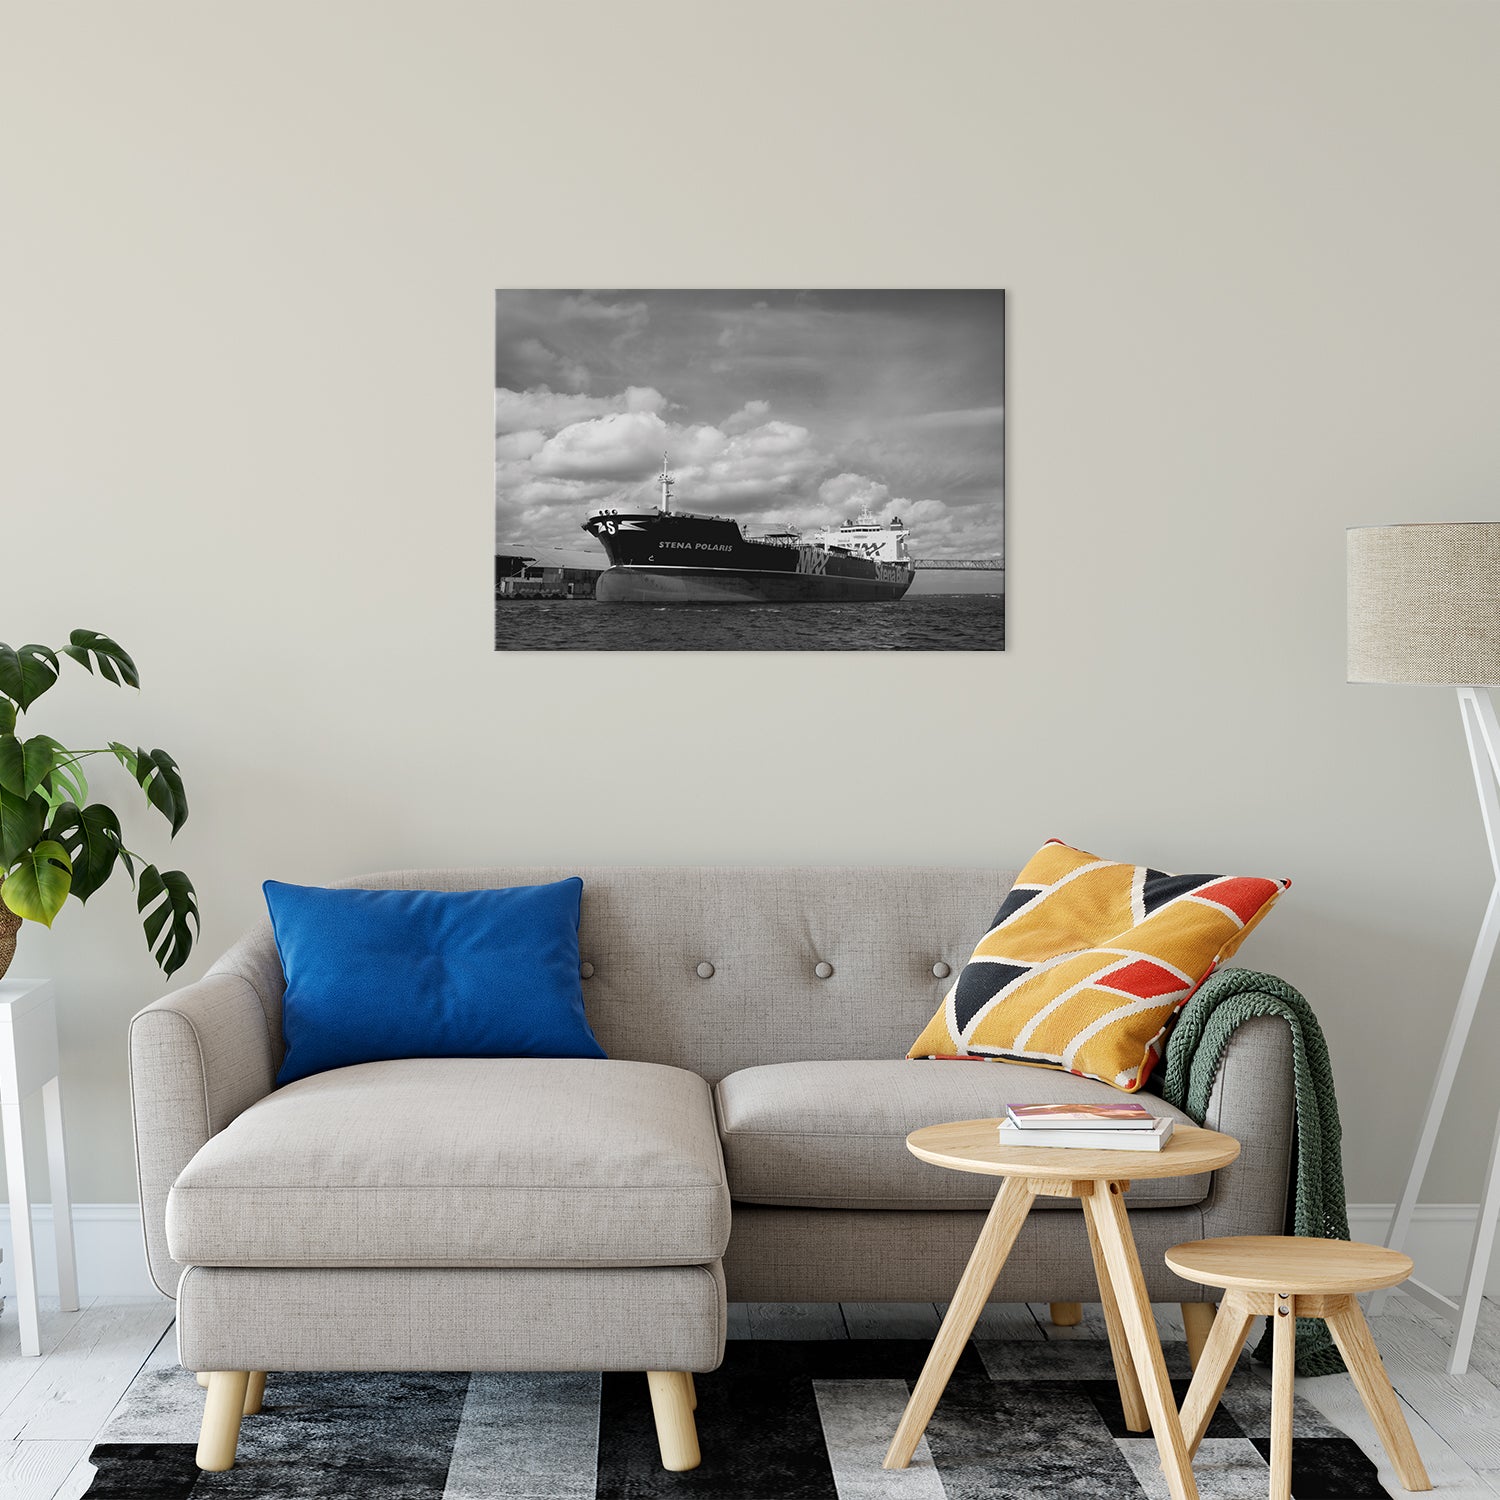 Large Abstract Coastal Art: Ship On The St. Johns River Coastal Photo Black and White Fine Art Canvas Wall Art Prints